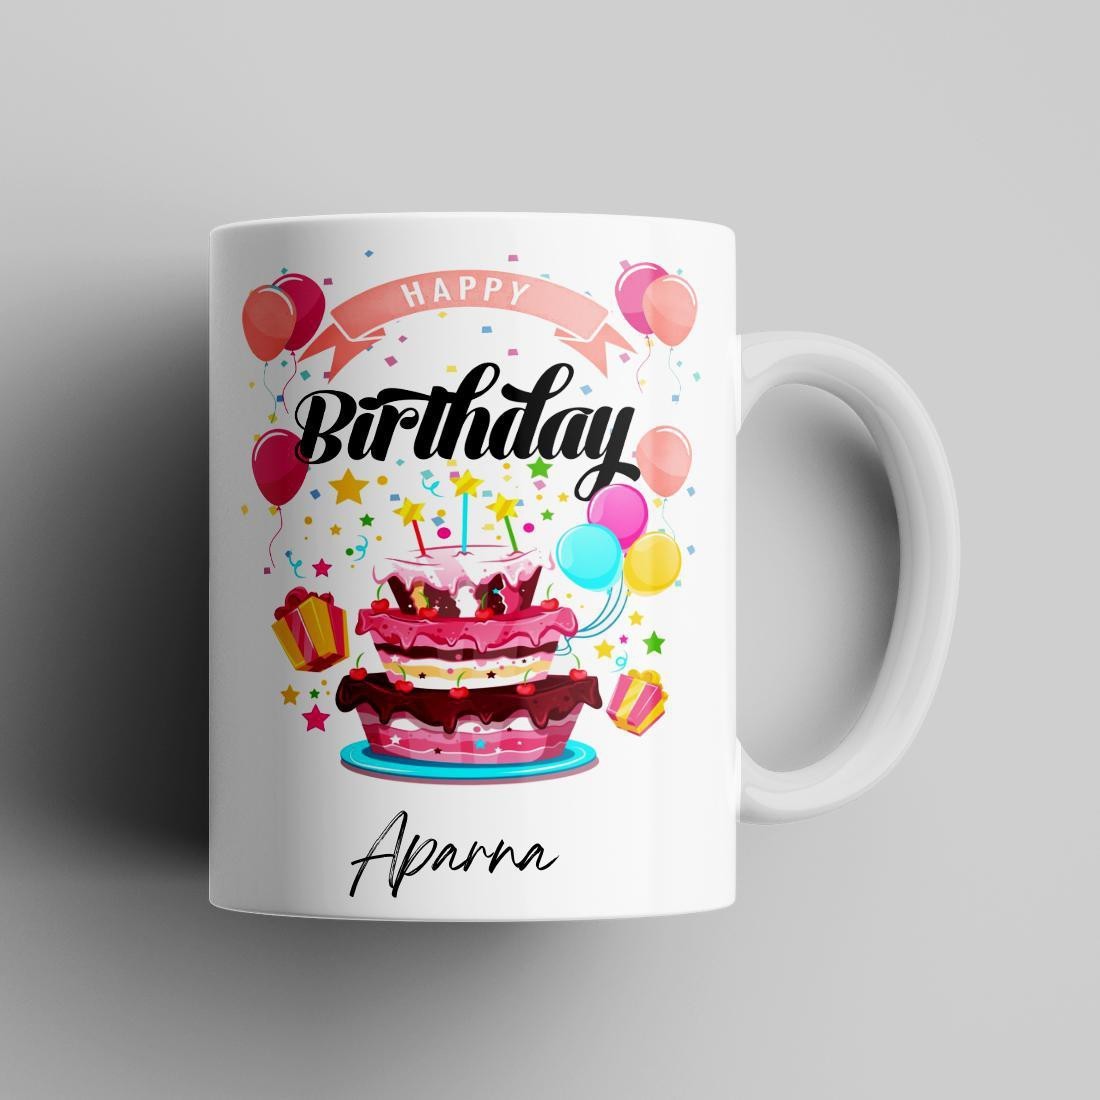 ▷ Happy Birthday Aparna GIF 🎂 Images Animated Wishes【29 GiFs】